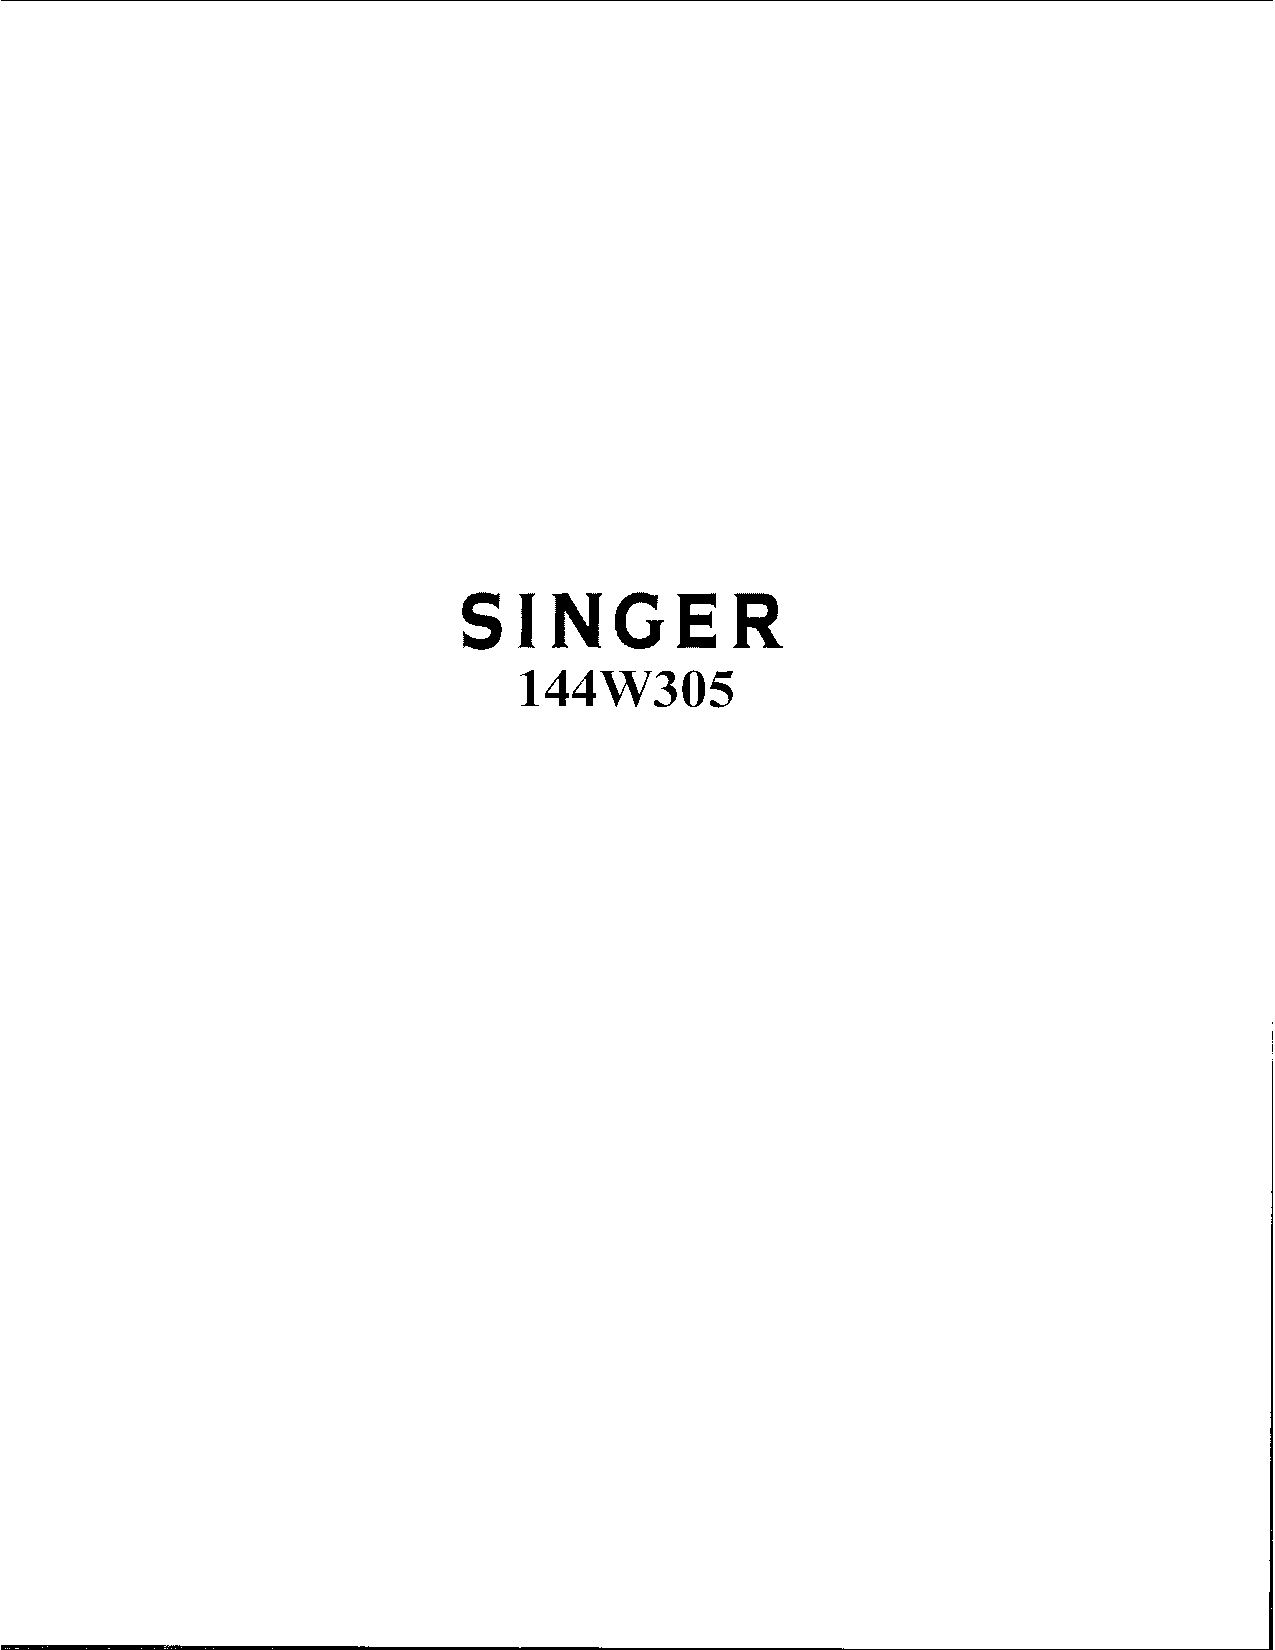 Singer 144W305 User Manual